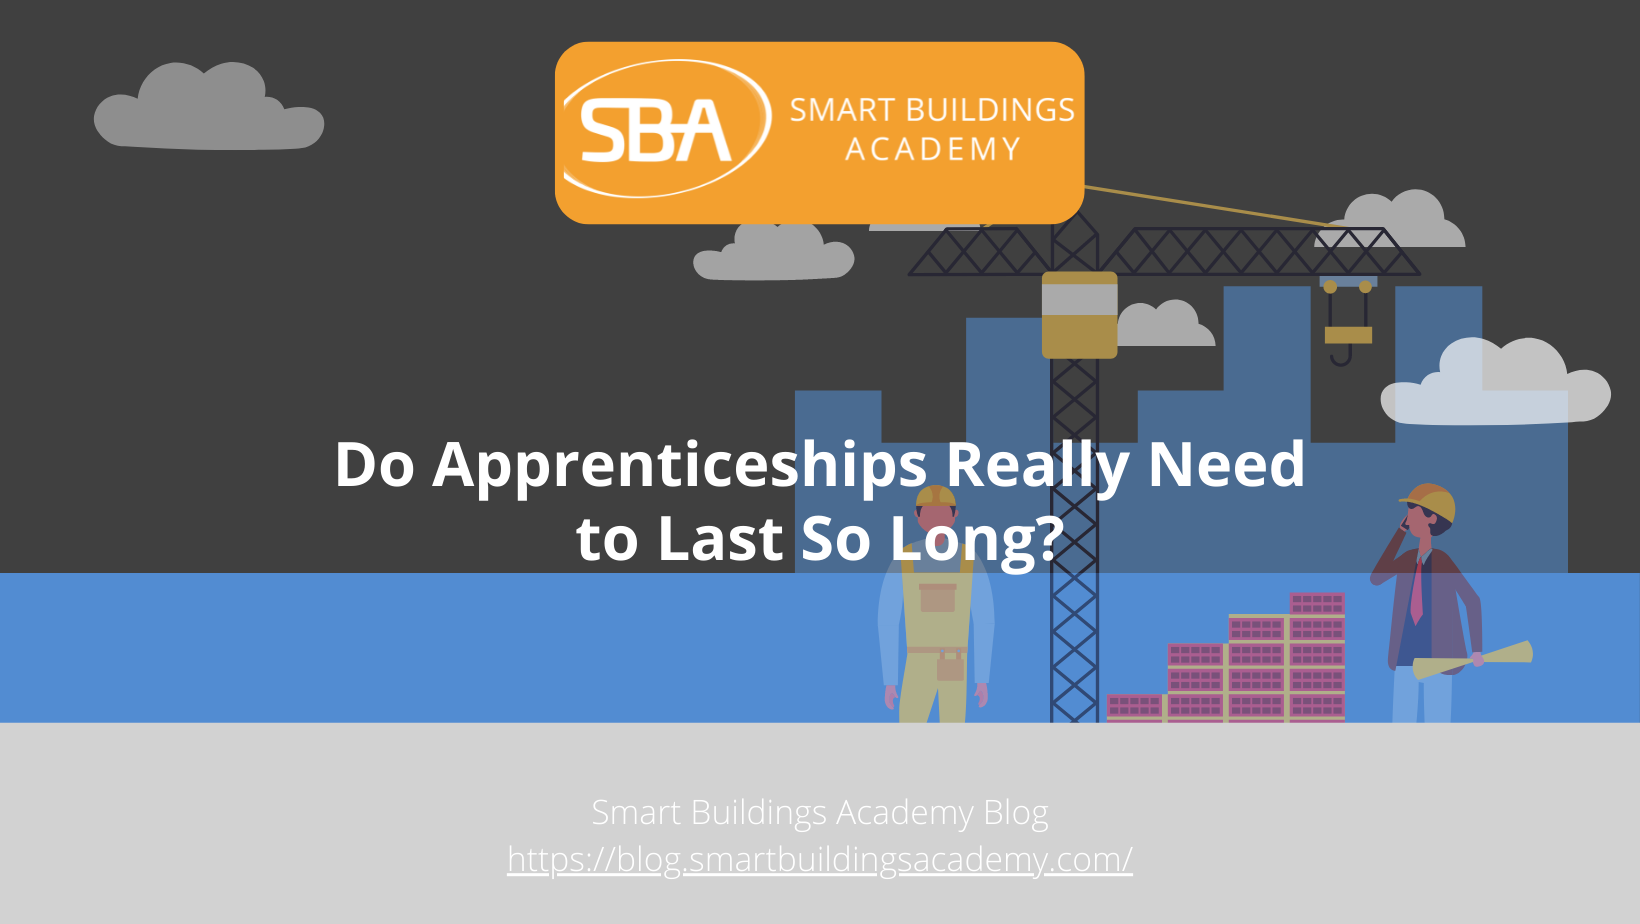 Do apprenticeships really need to last so long?